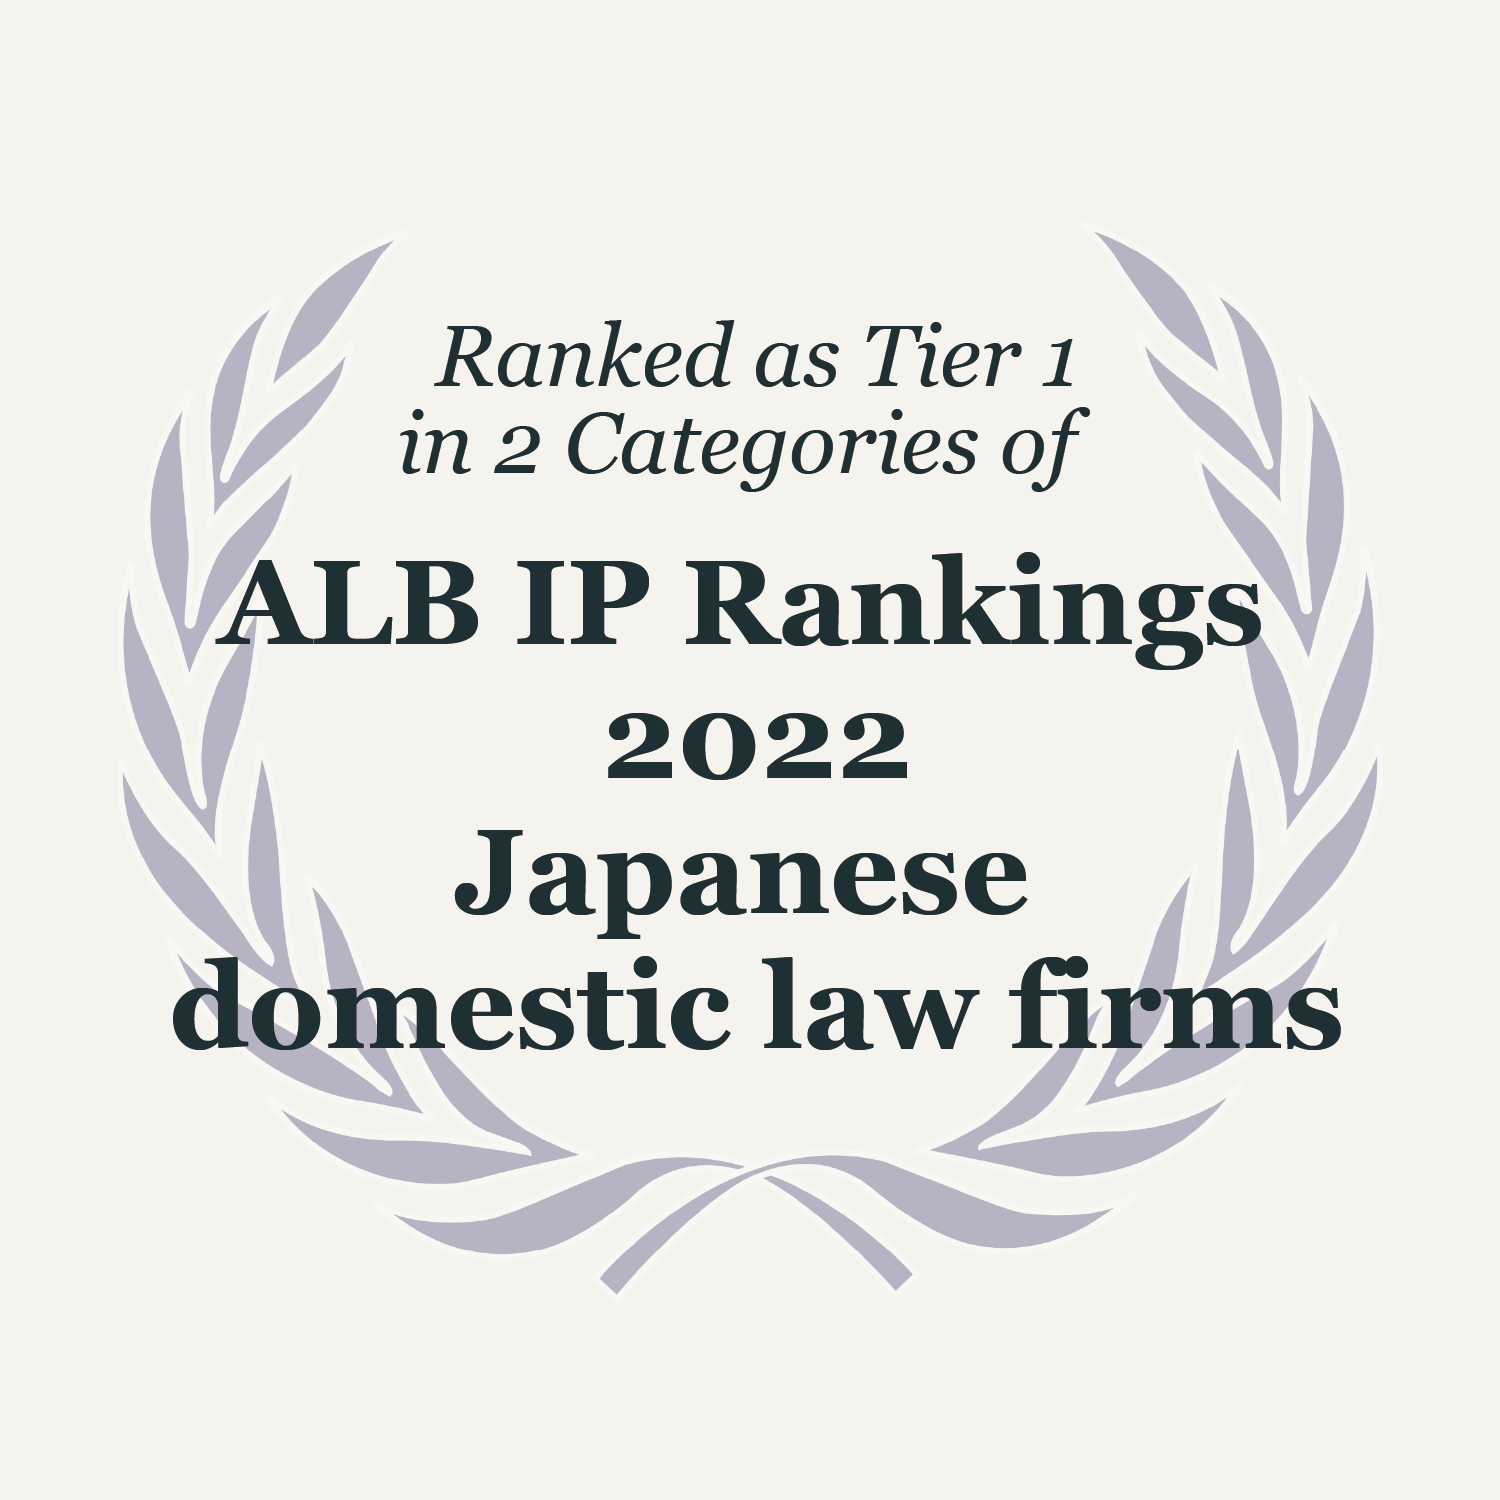 Atsumi & Sakai has received high evaluation in the ALB IP Rankings 2022